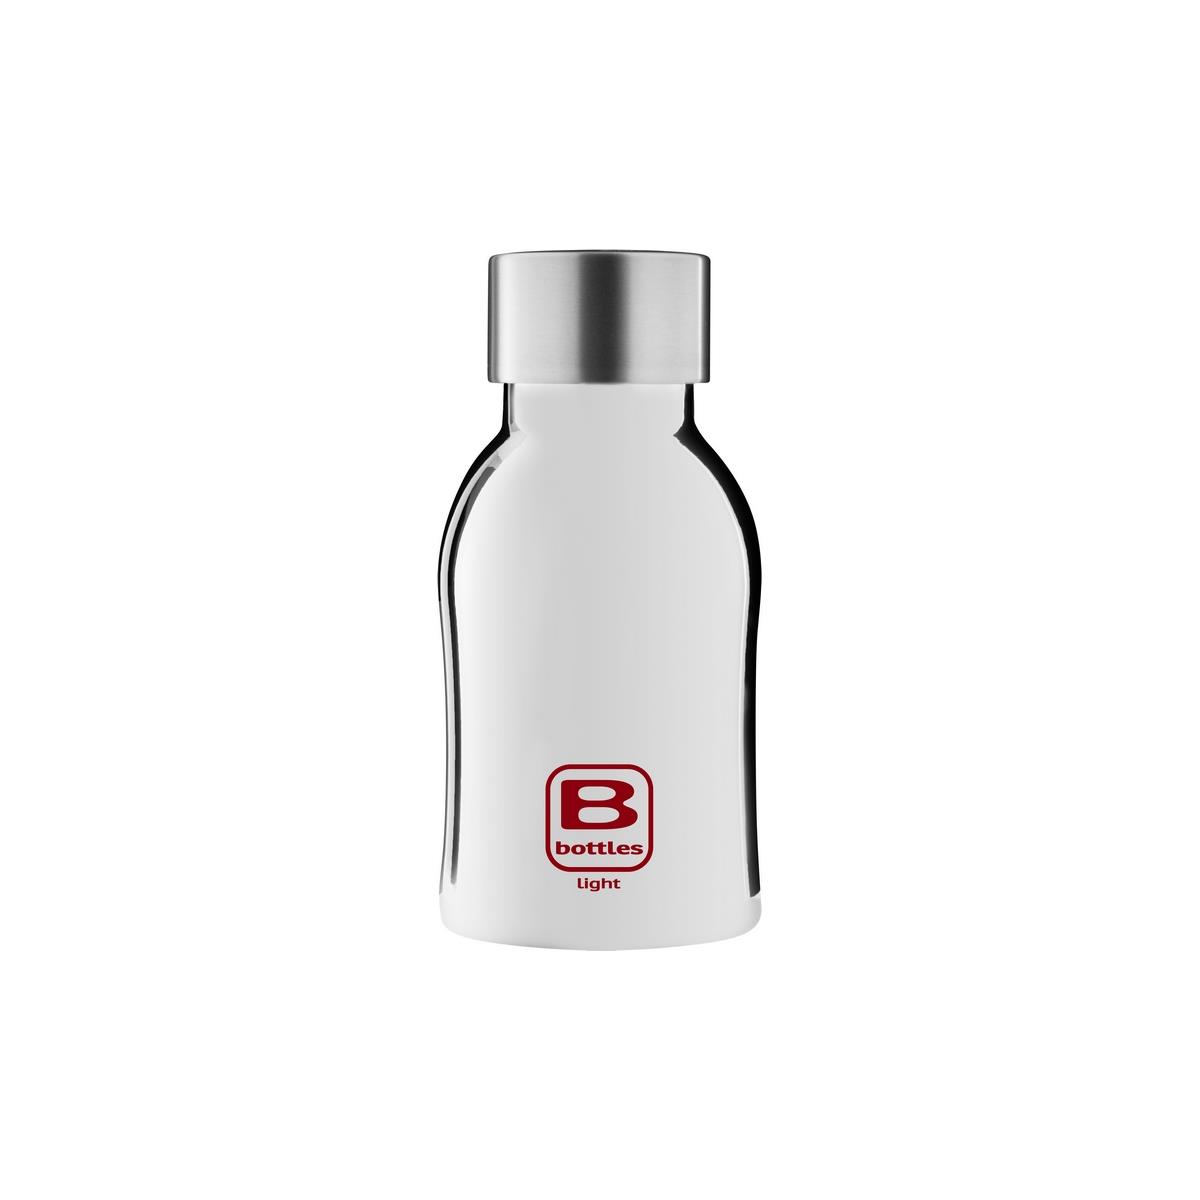 B Bottles Light - Silver Lux - 350 ml - Botella de acero inoxidable 18/10 ultraligera y compacta